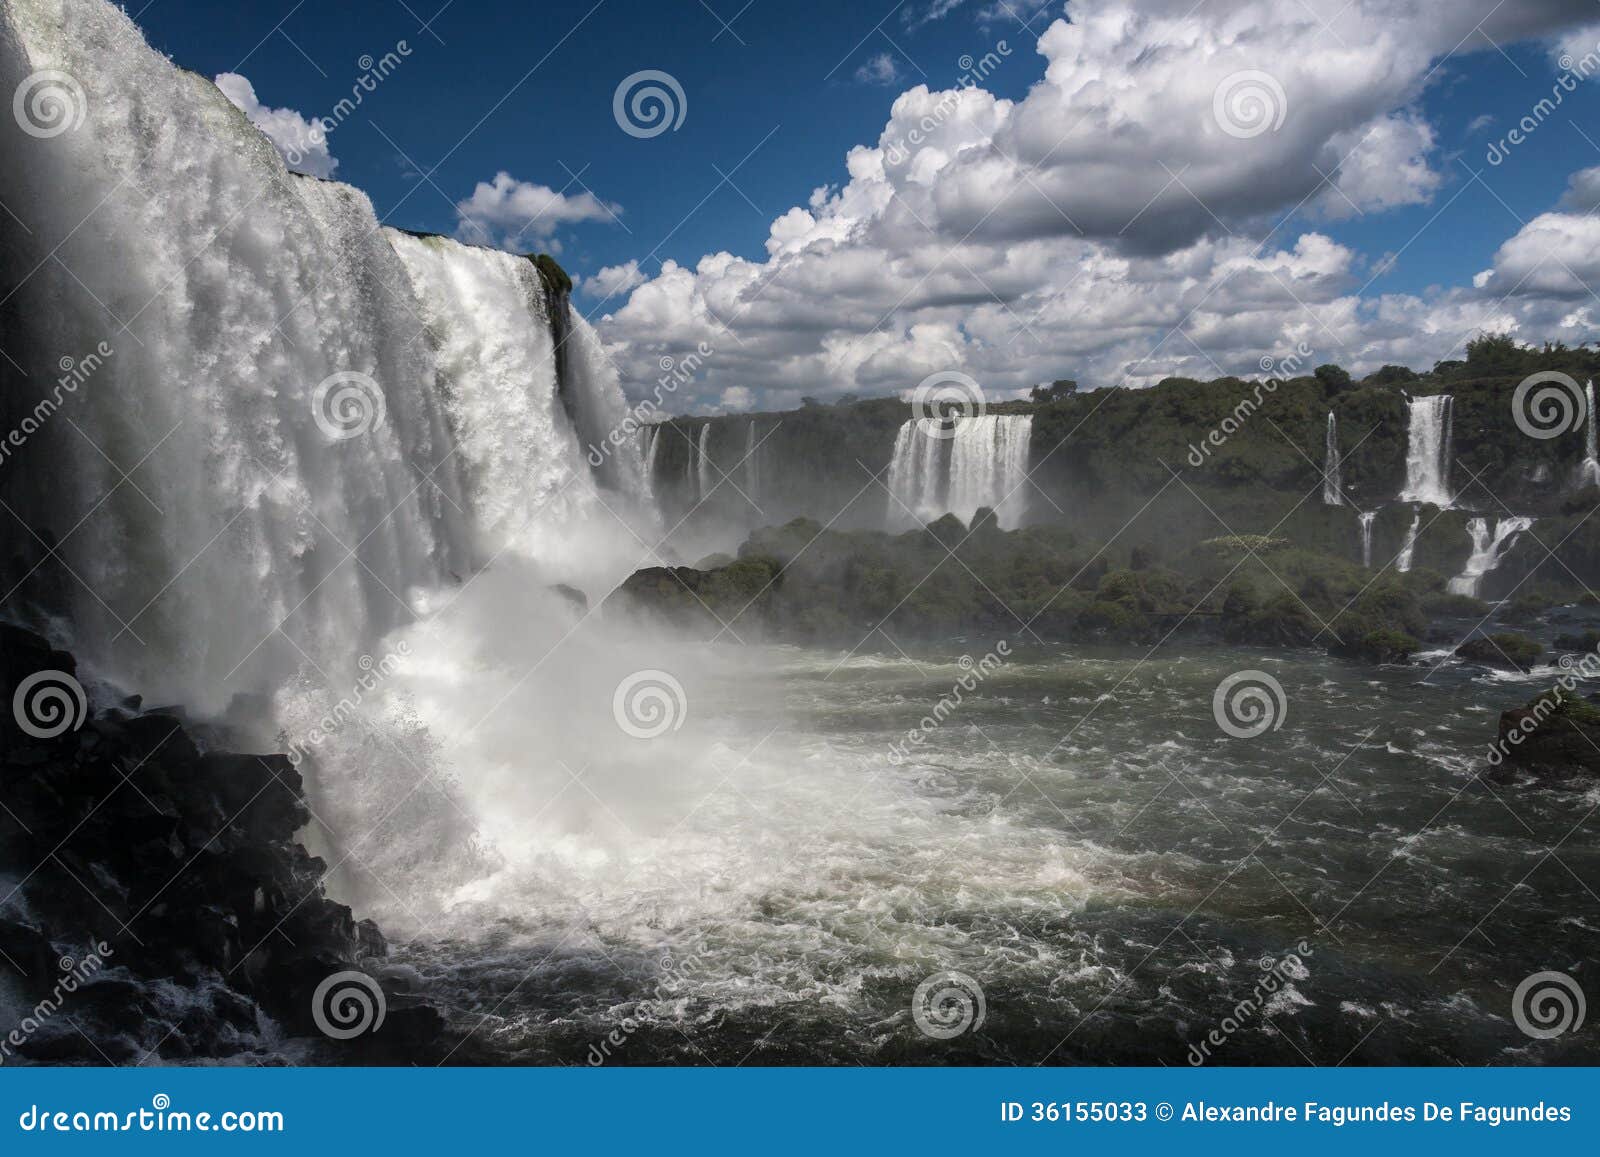 foz do iguassu falls argentina brazil